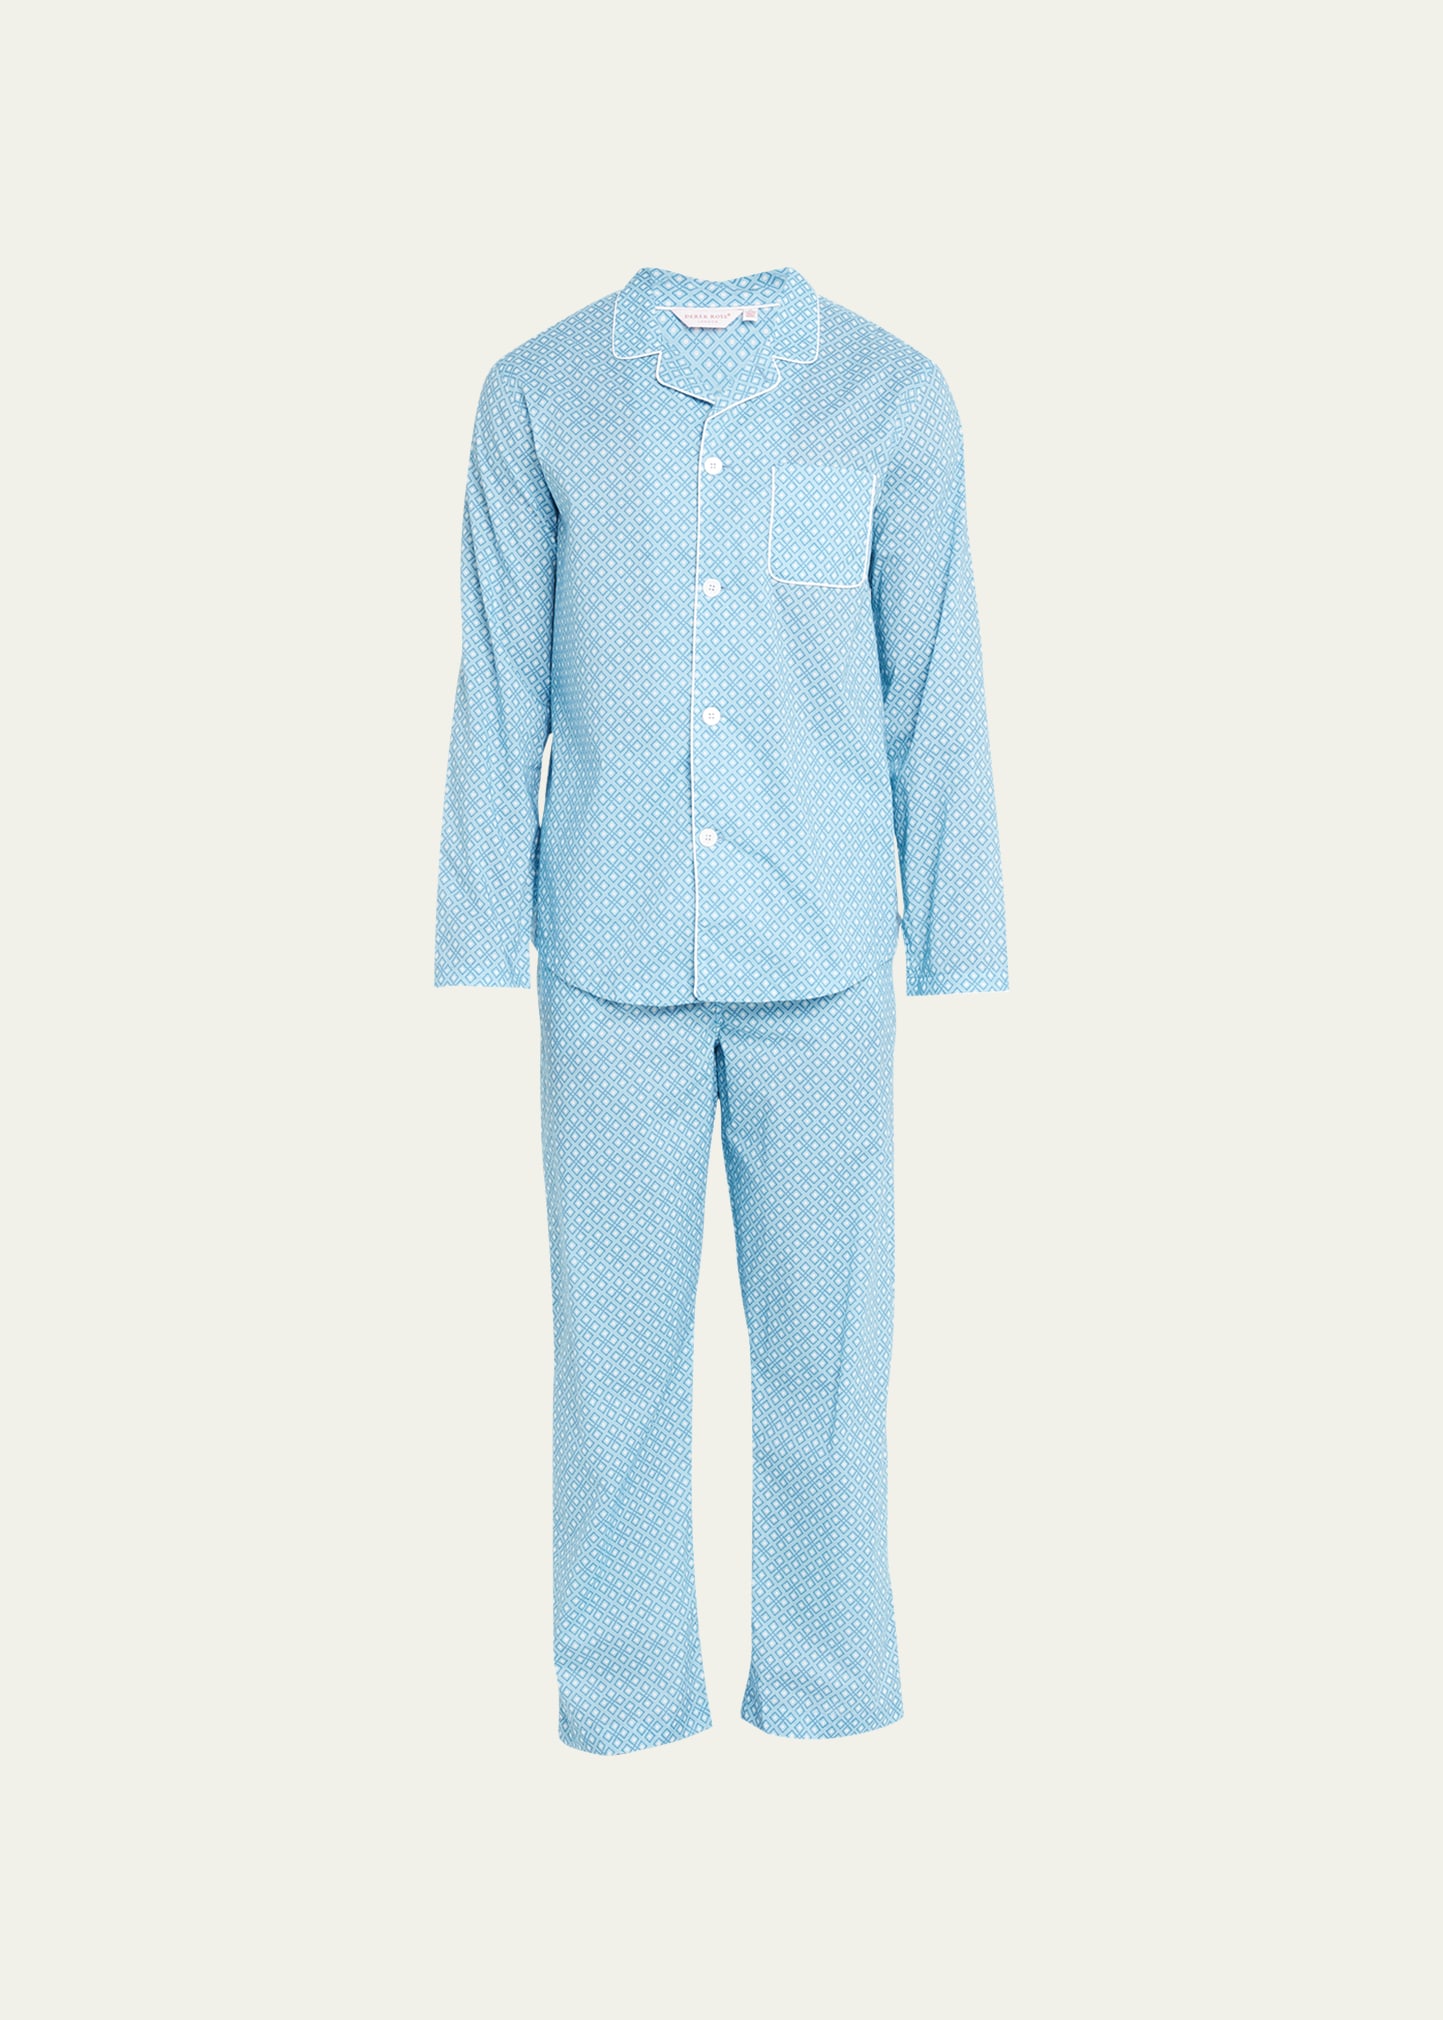 Men's Modern-Fit Patterned Cotton Pajama Set